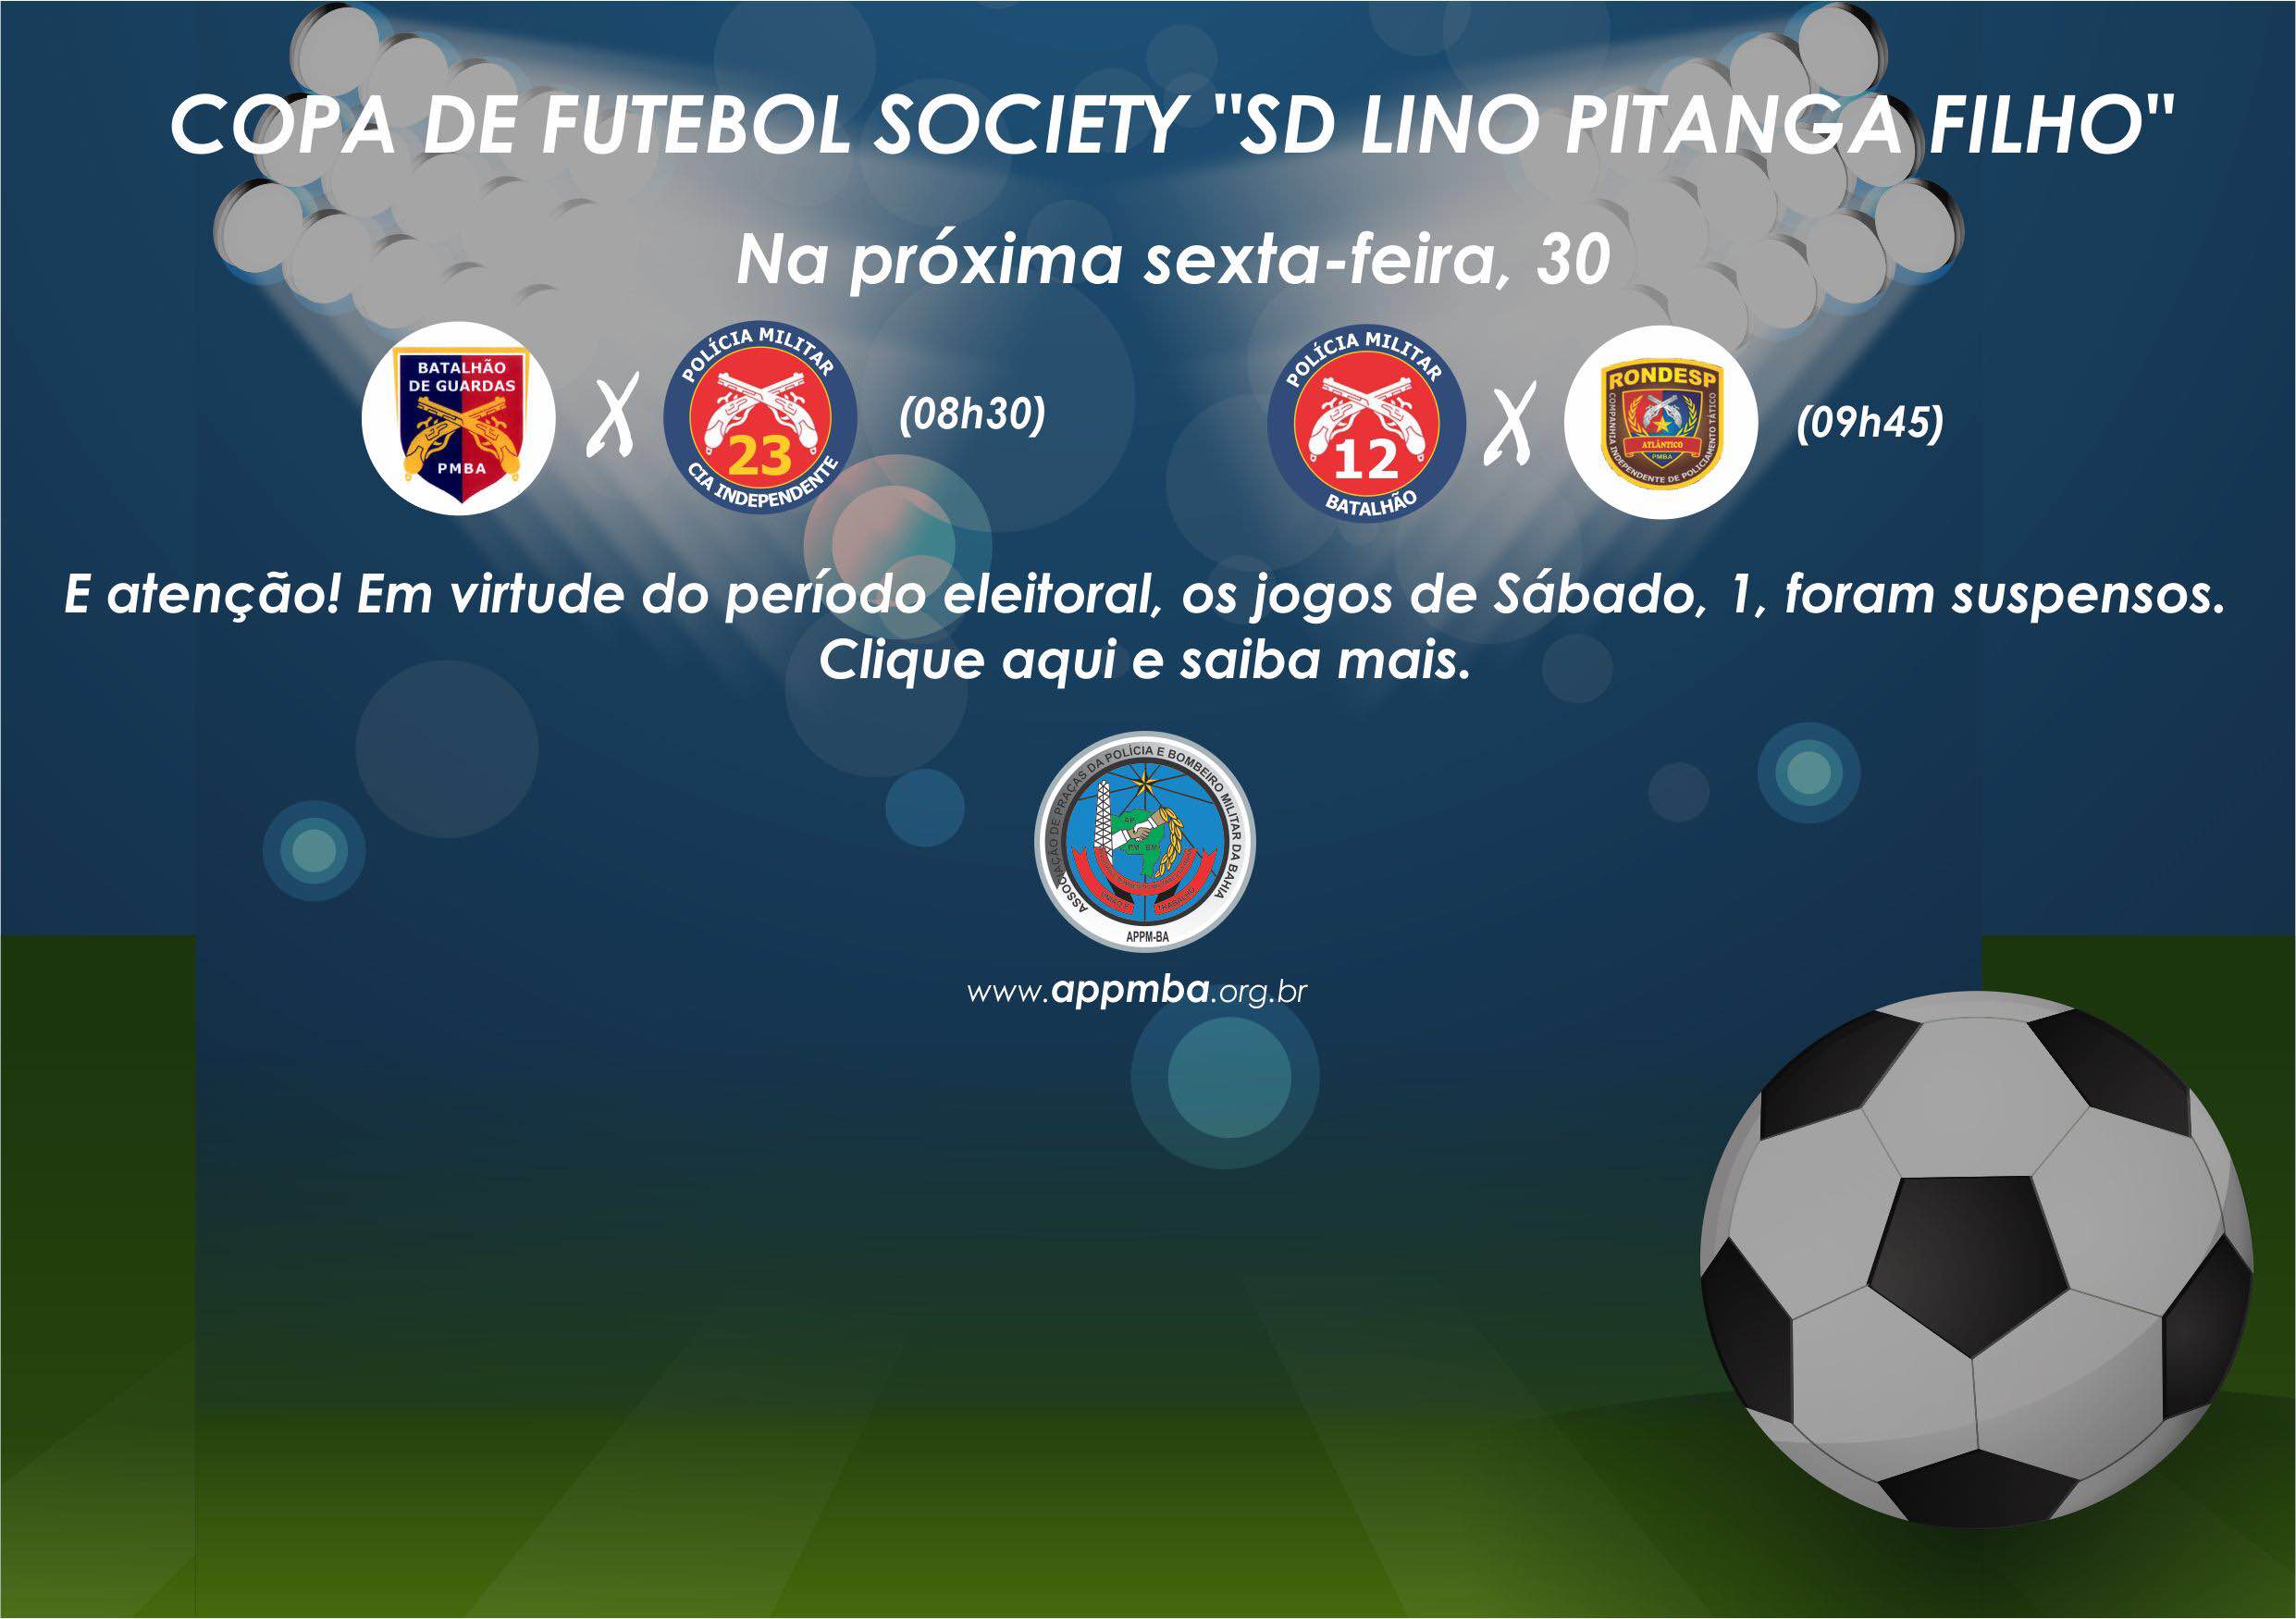 CONVITE - Copa de Futebol Society SD Lino Pitanga Filho